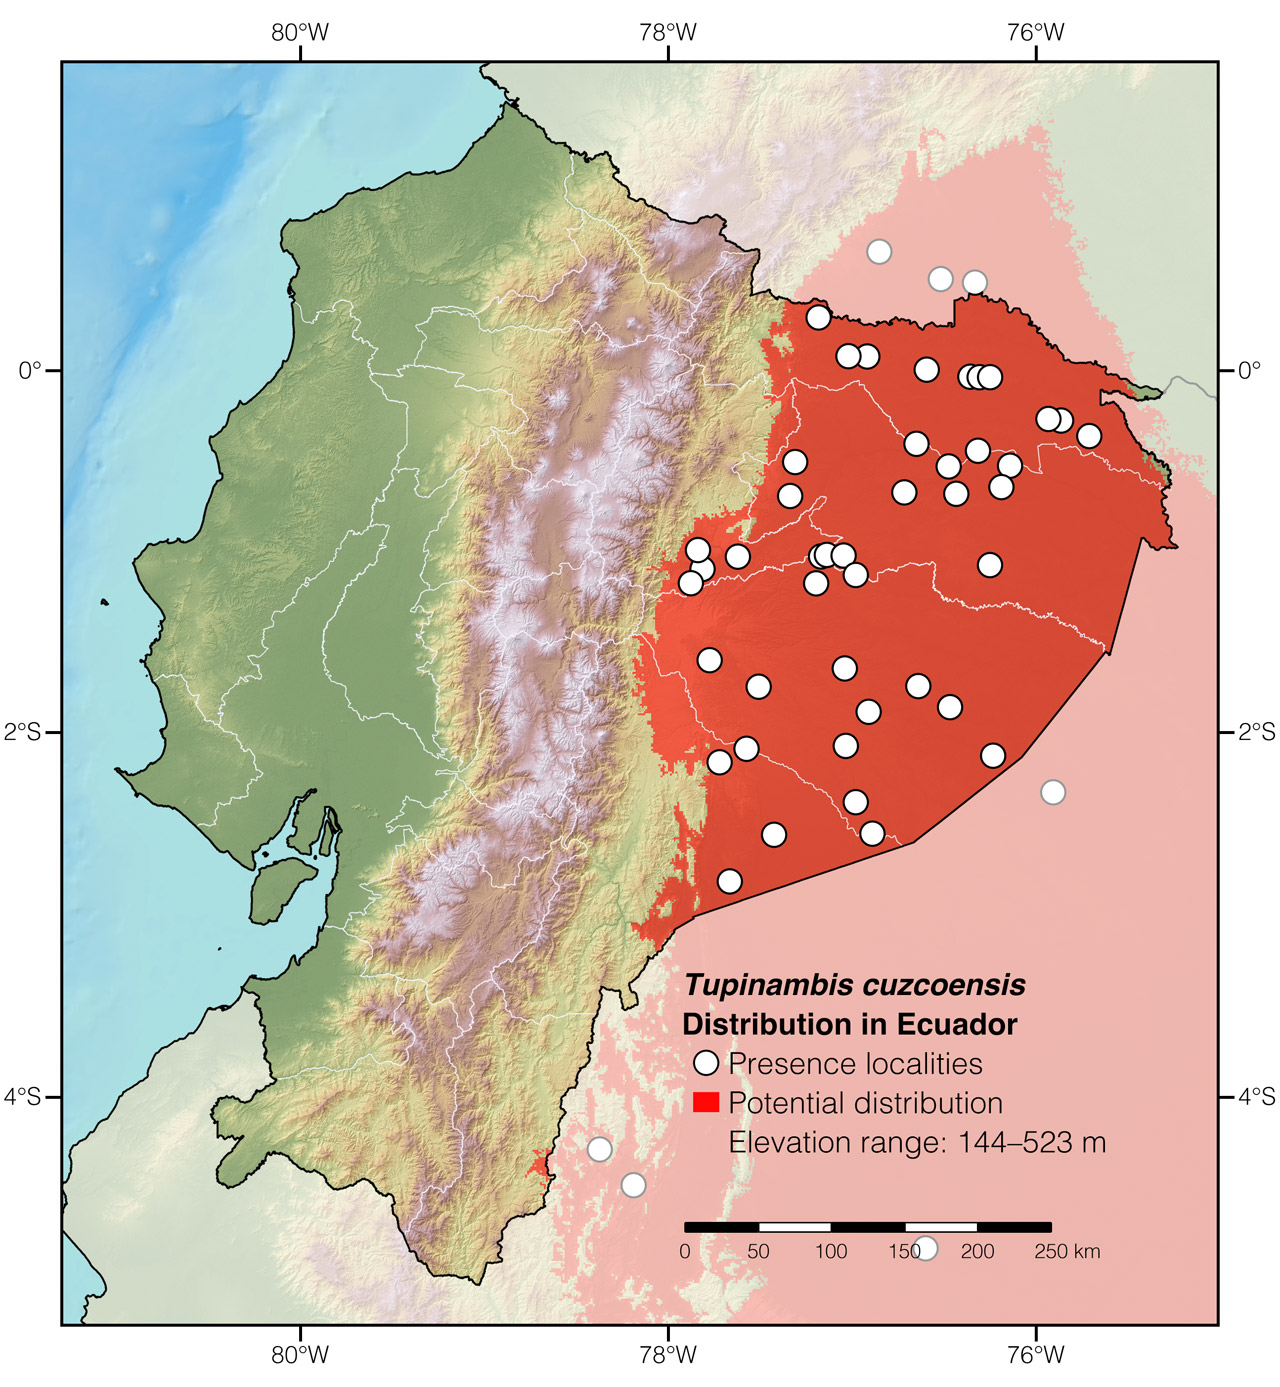 Distribution of Tupinambis cuzcoensis in Ecuador